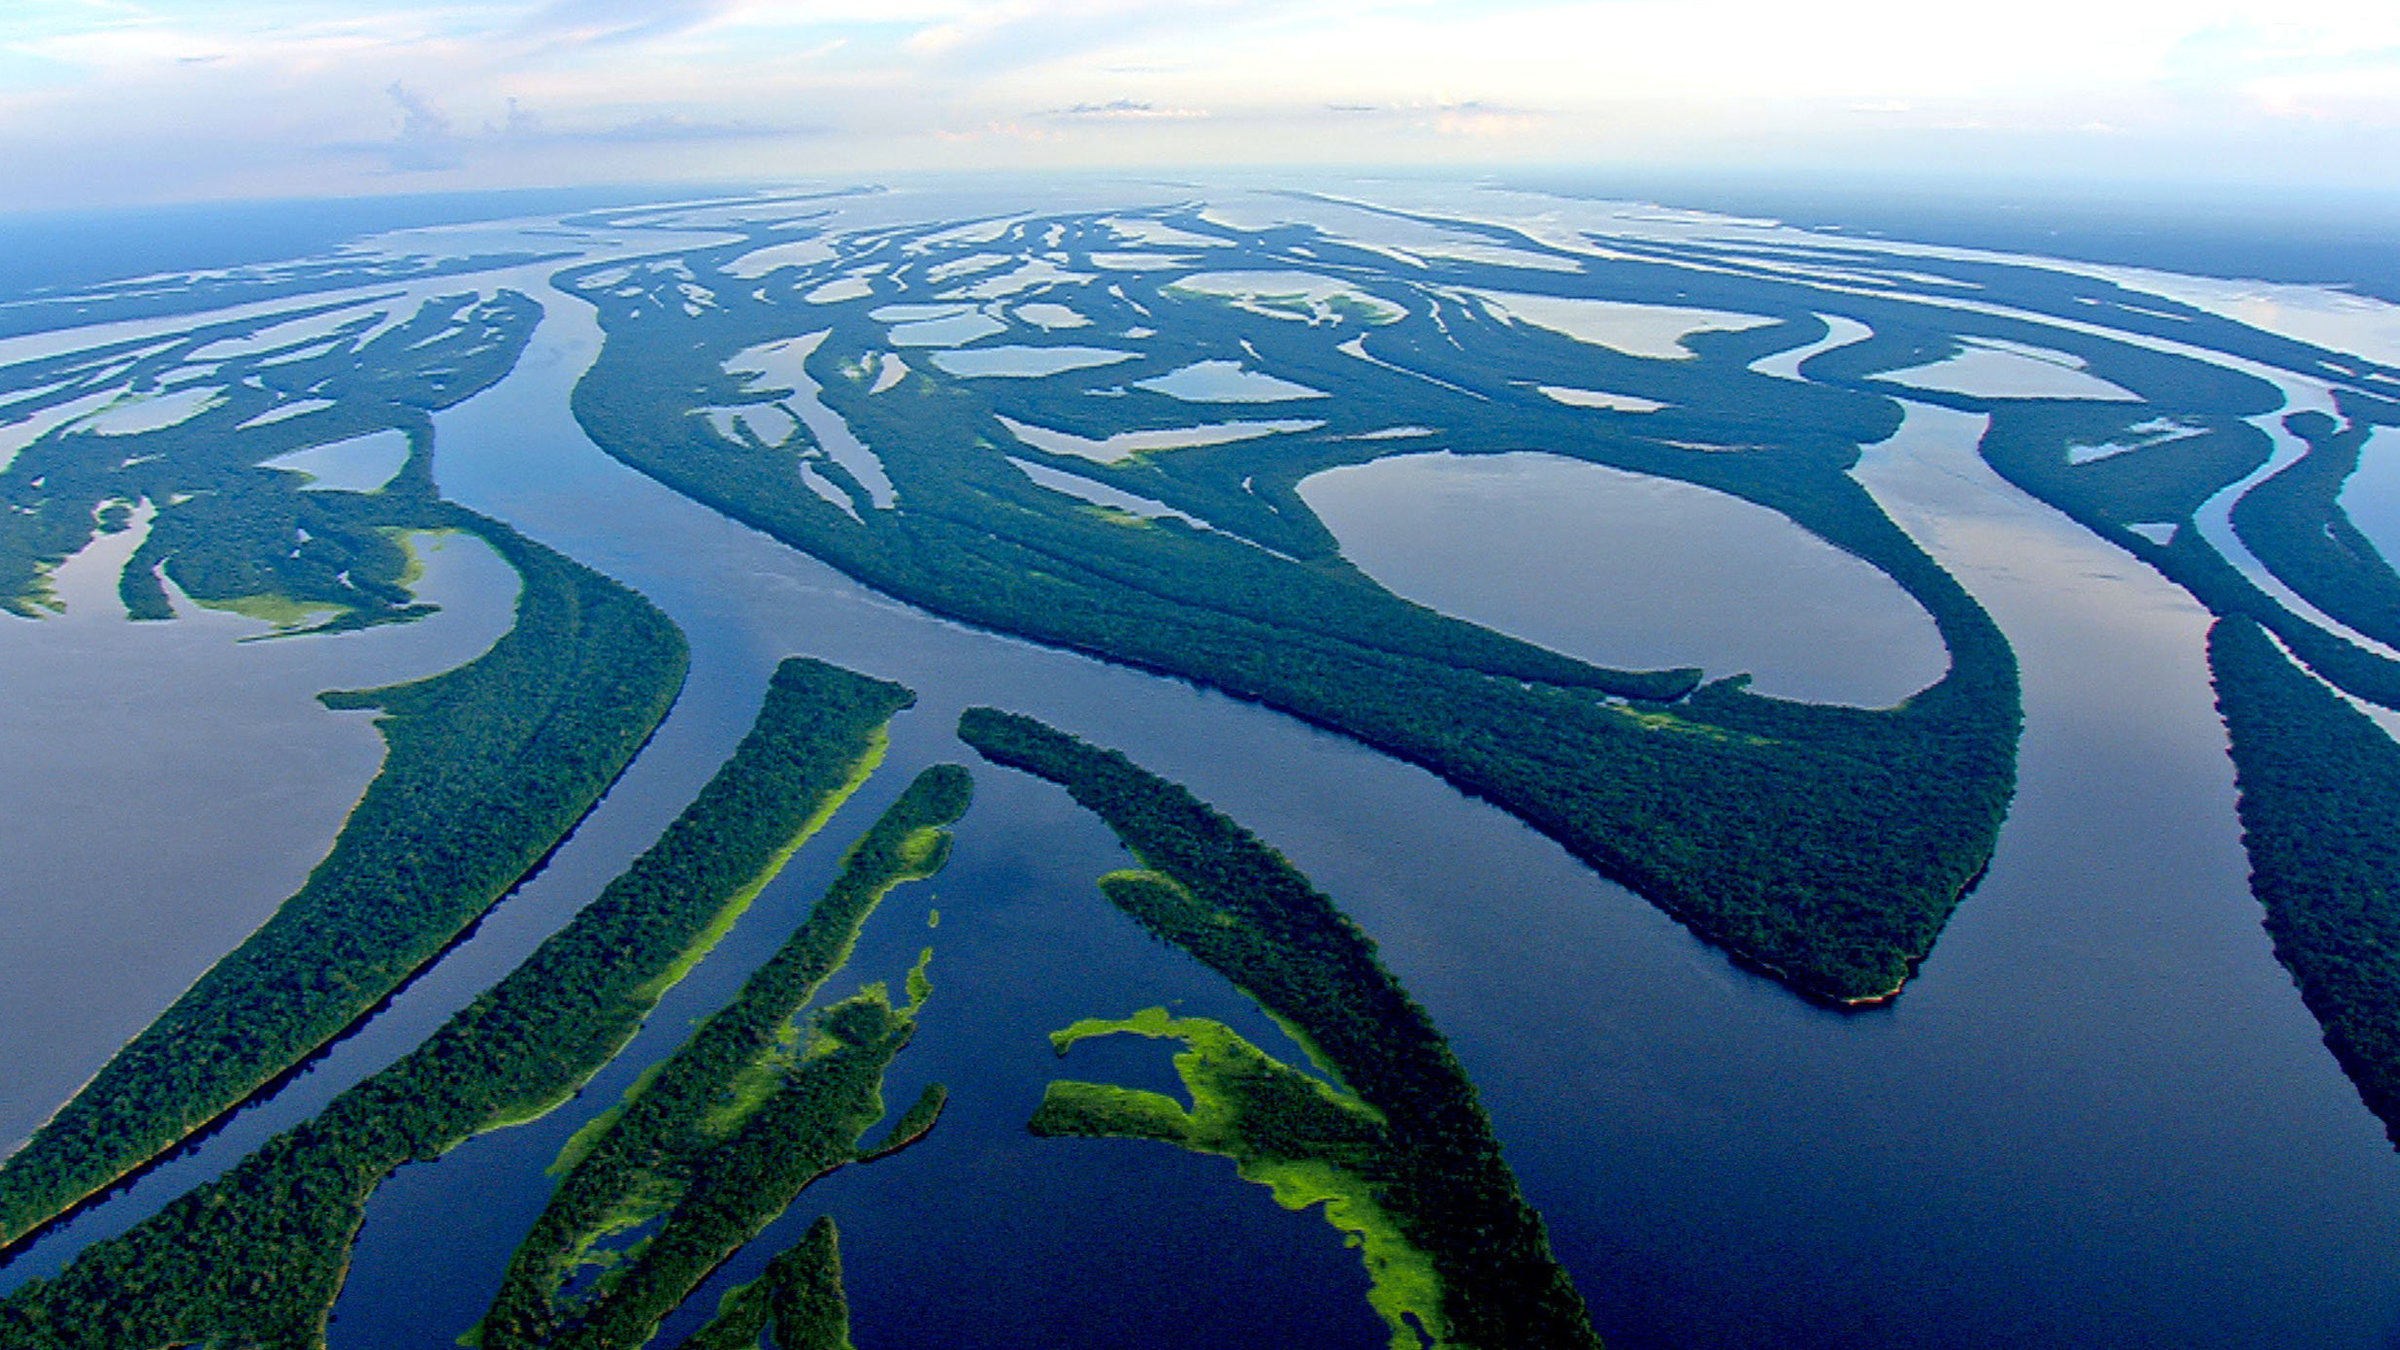 Река Амазонка